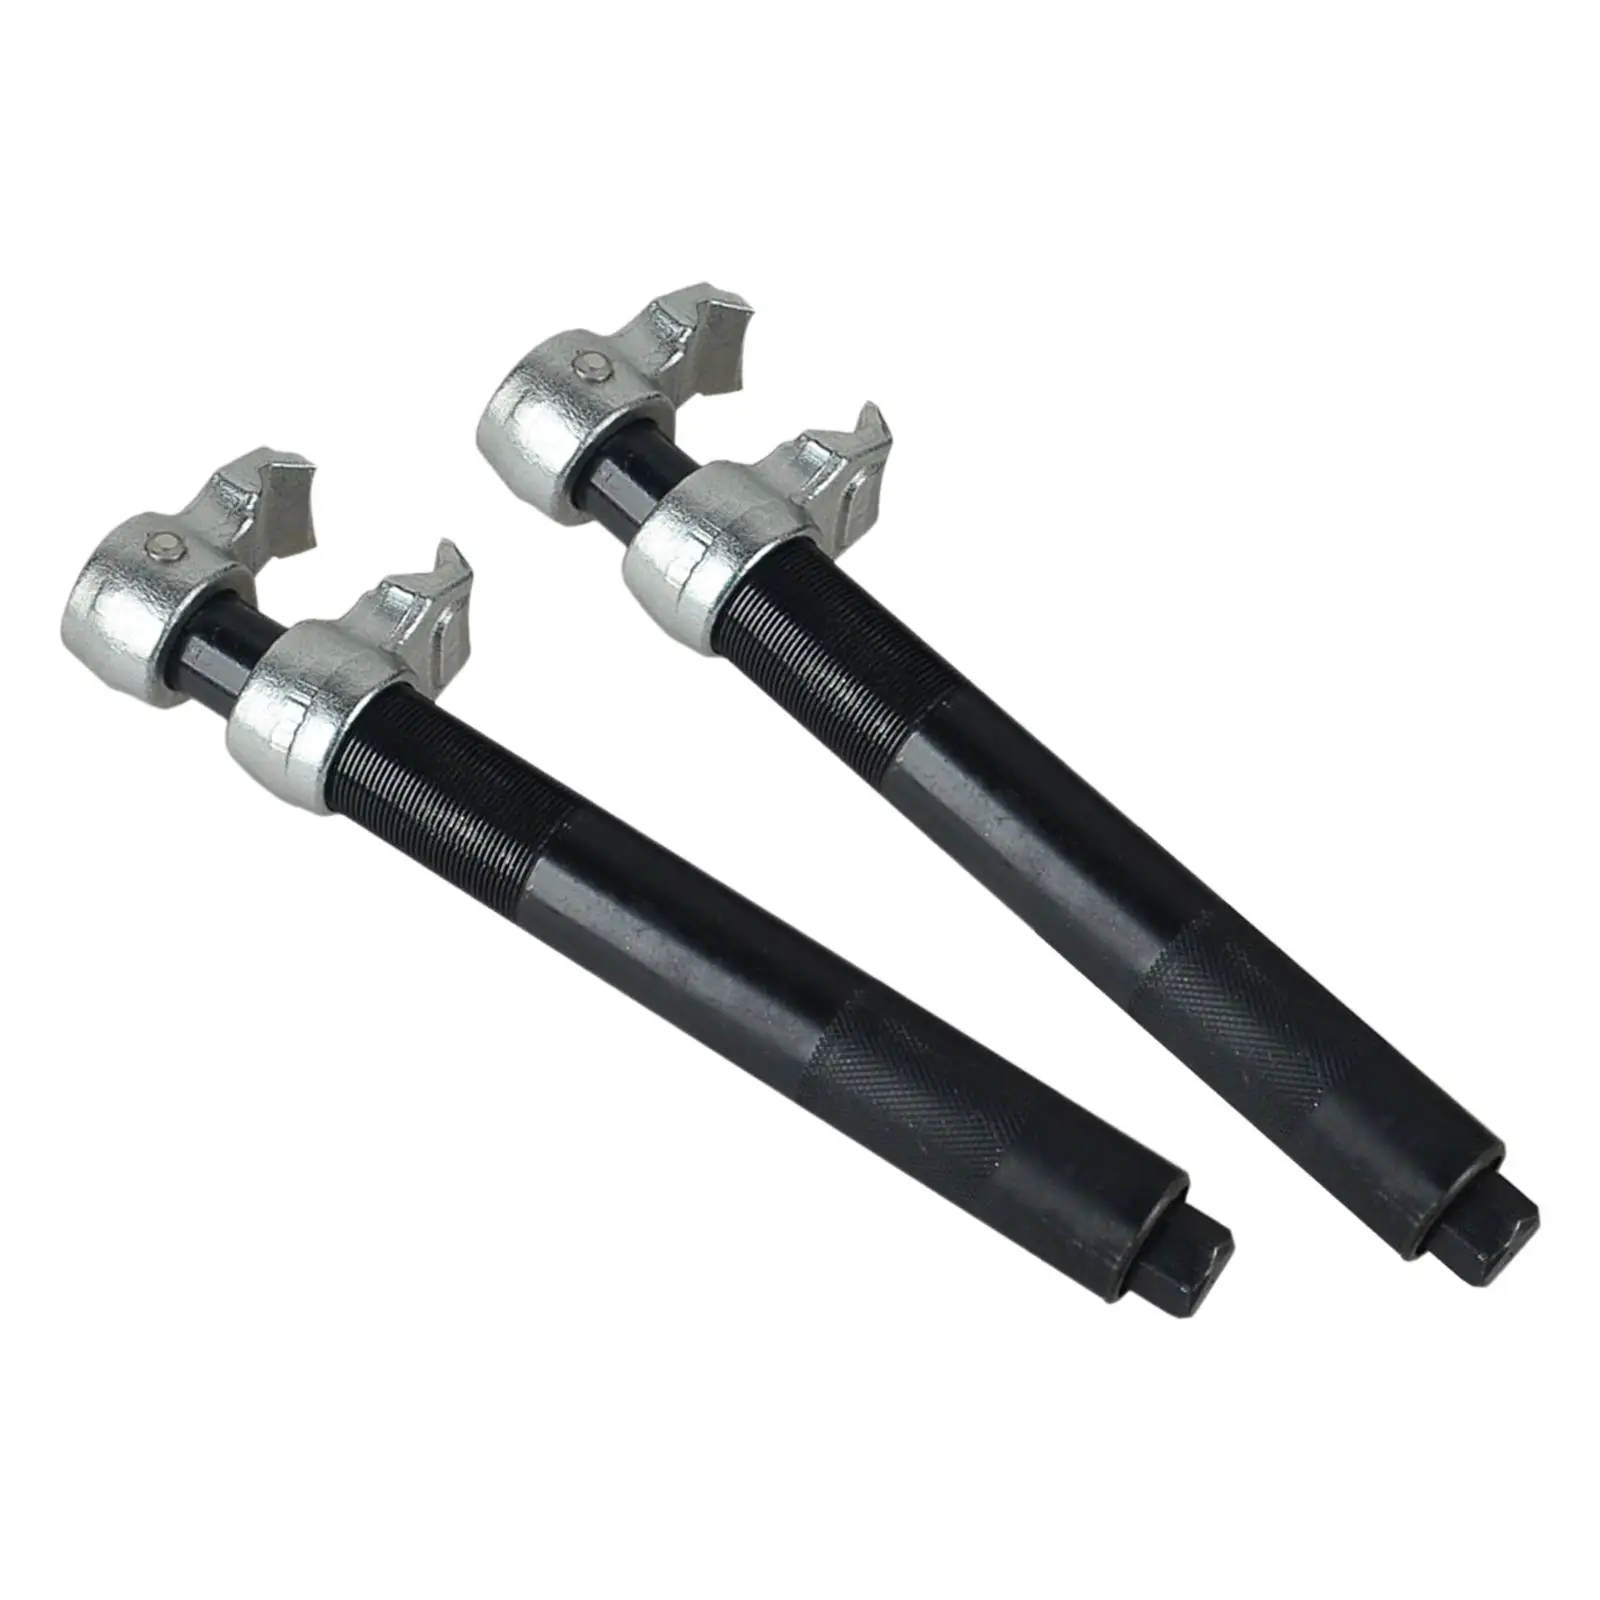 Compressor Adjustable Adjuster Tool Premium Replaces Professional Spring Struts Shocks